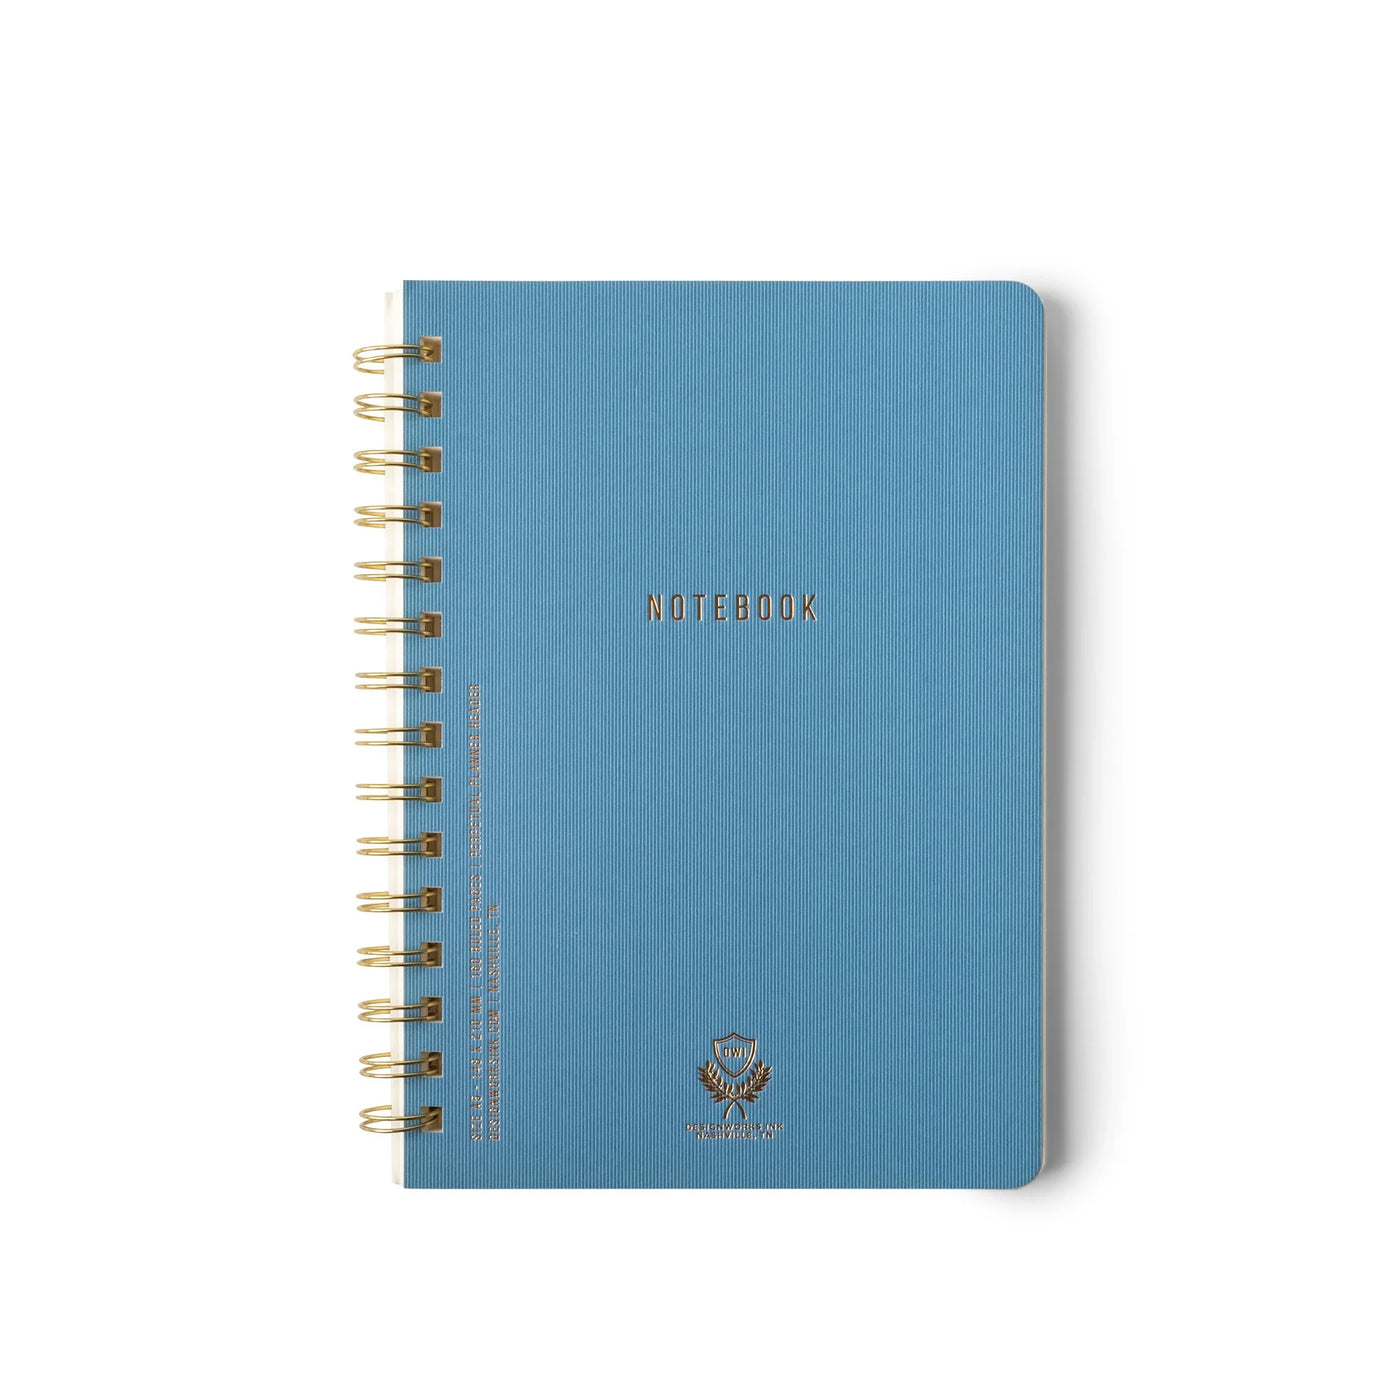 Textured Paper Twin Wire Notebook - Medium Blue